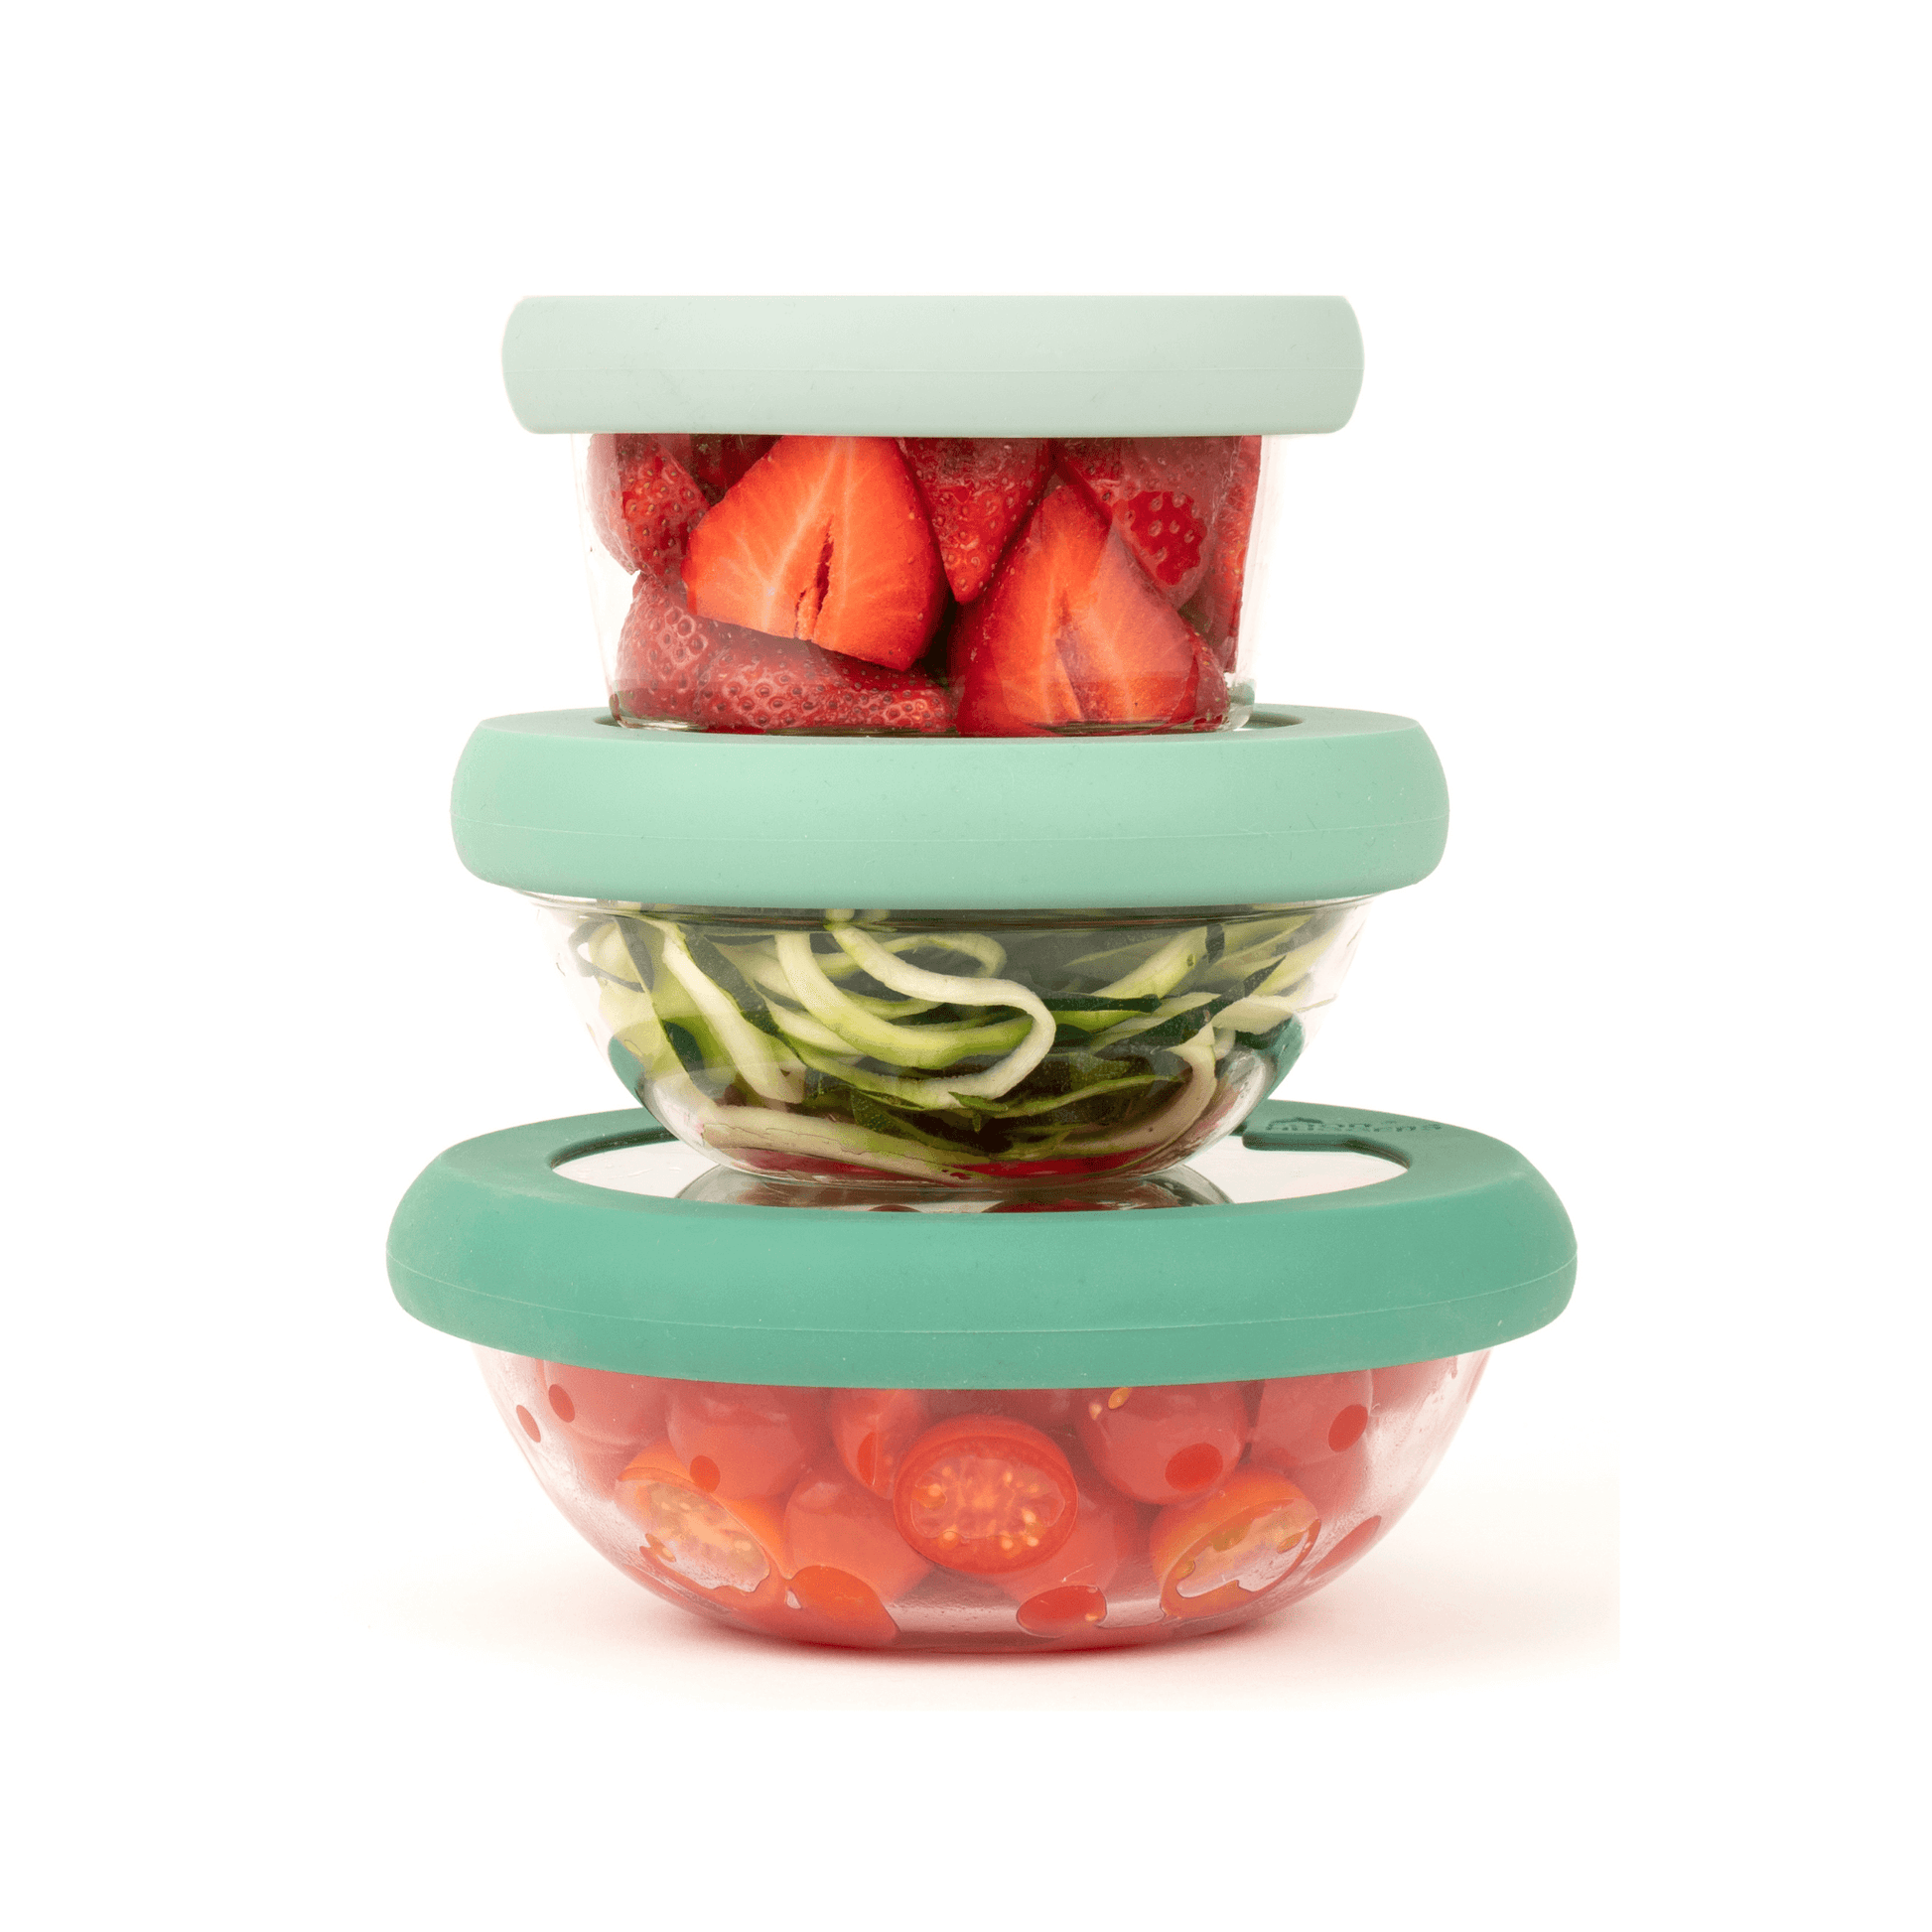 20-Piece Strawberry Design Glass Bowls with Lids Set- Mixing Bowls Set